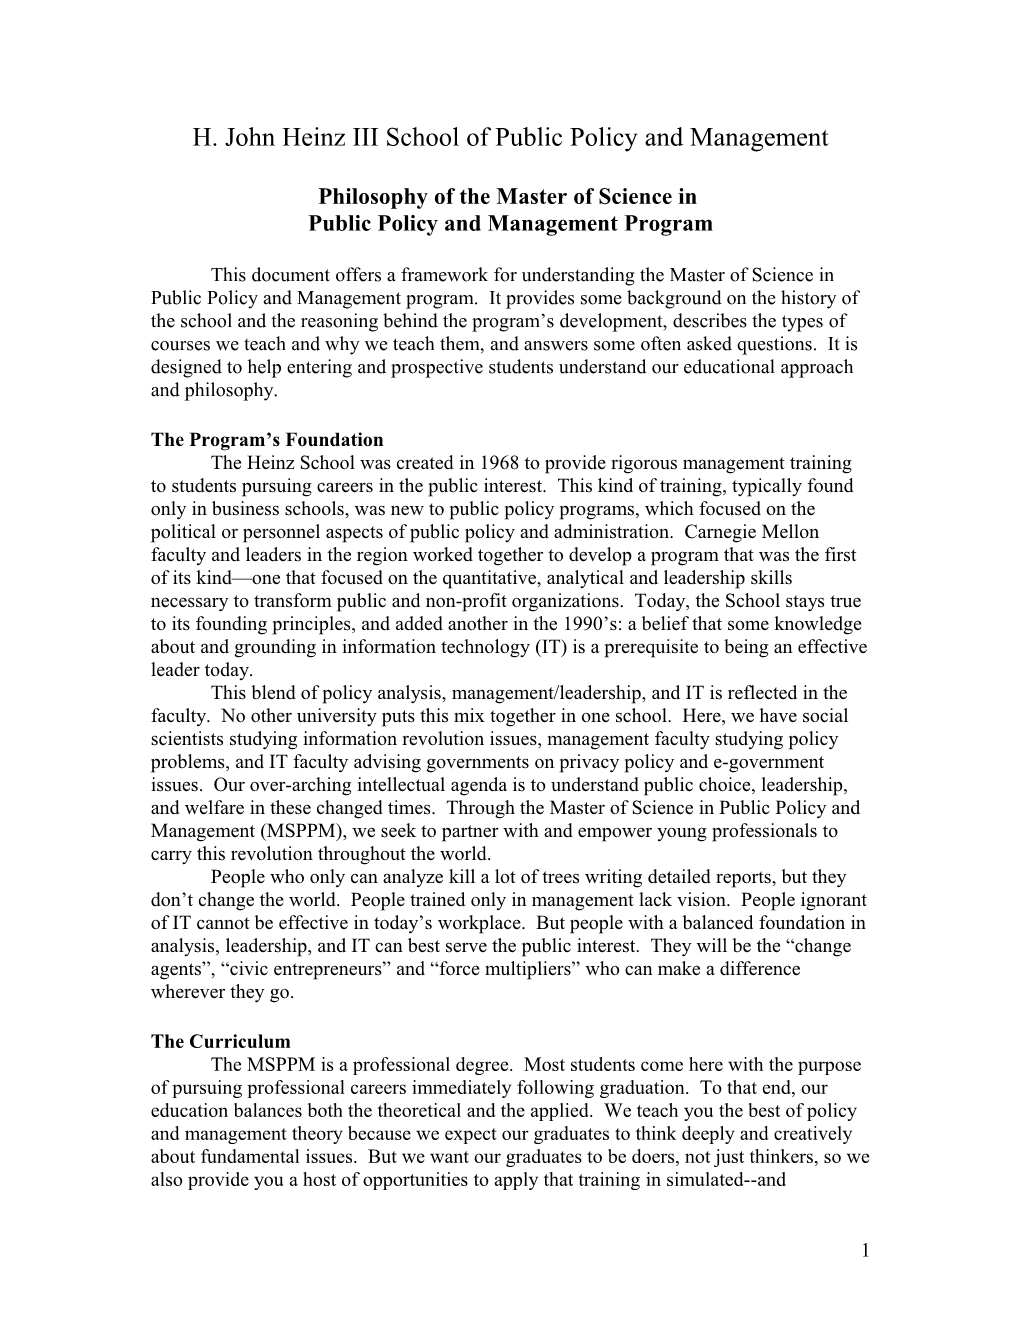 Philosophy of the MSPPM Program